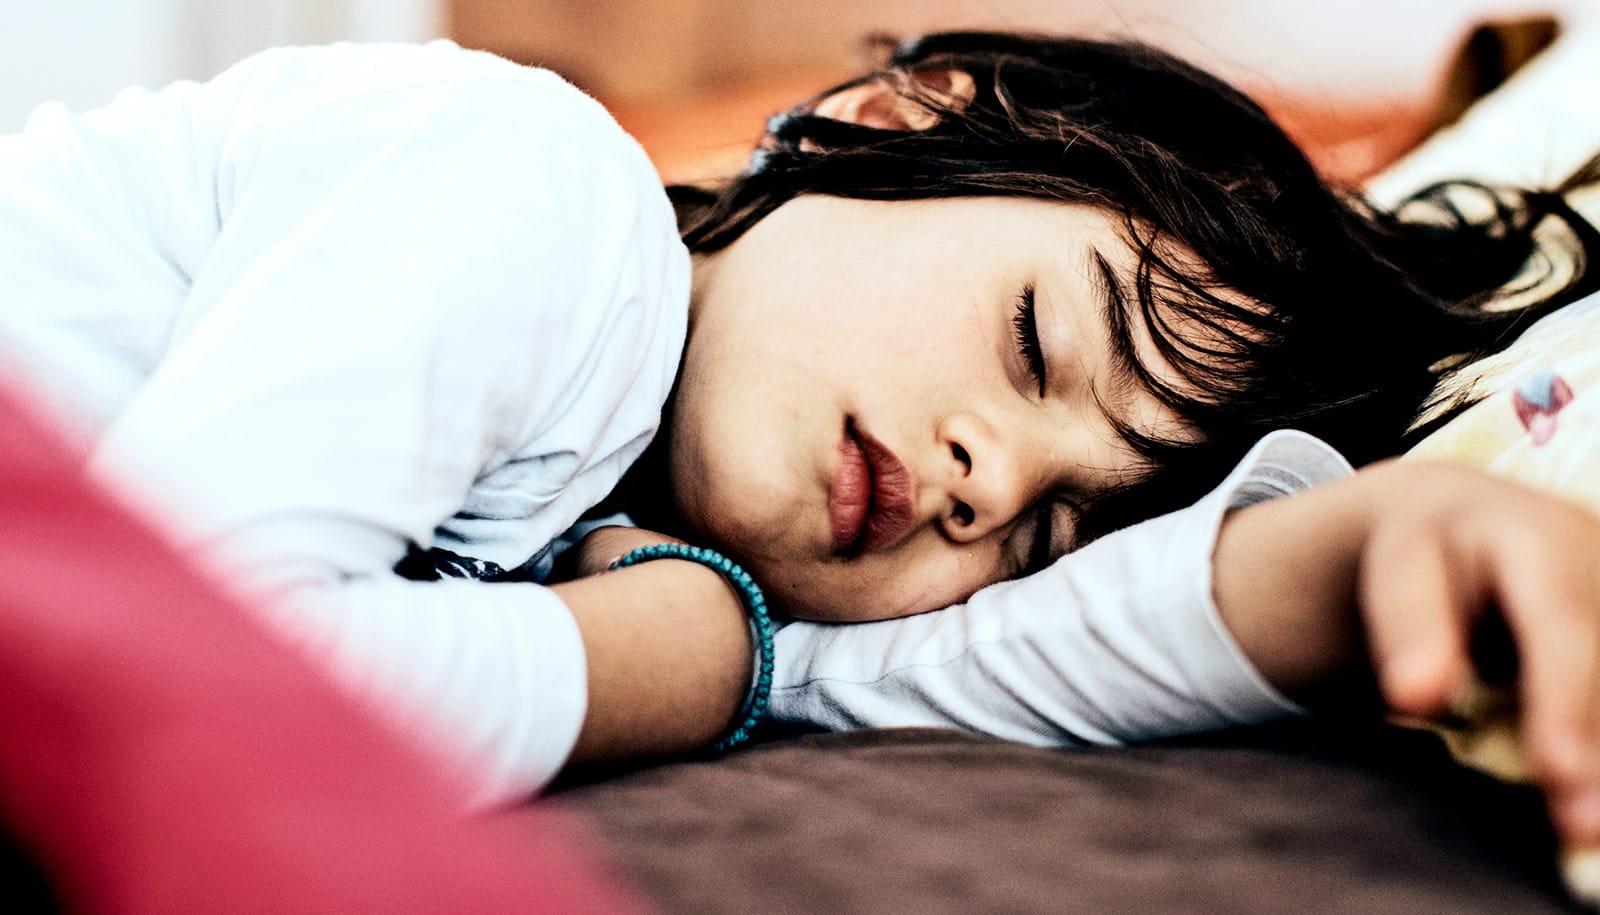 Kids with sleep apnea risk high blood pressure as teens - Futurity